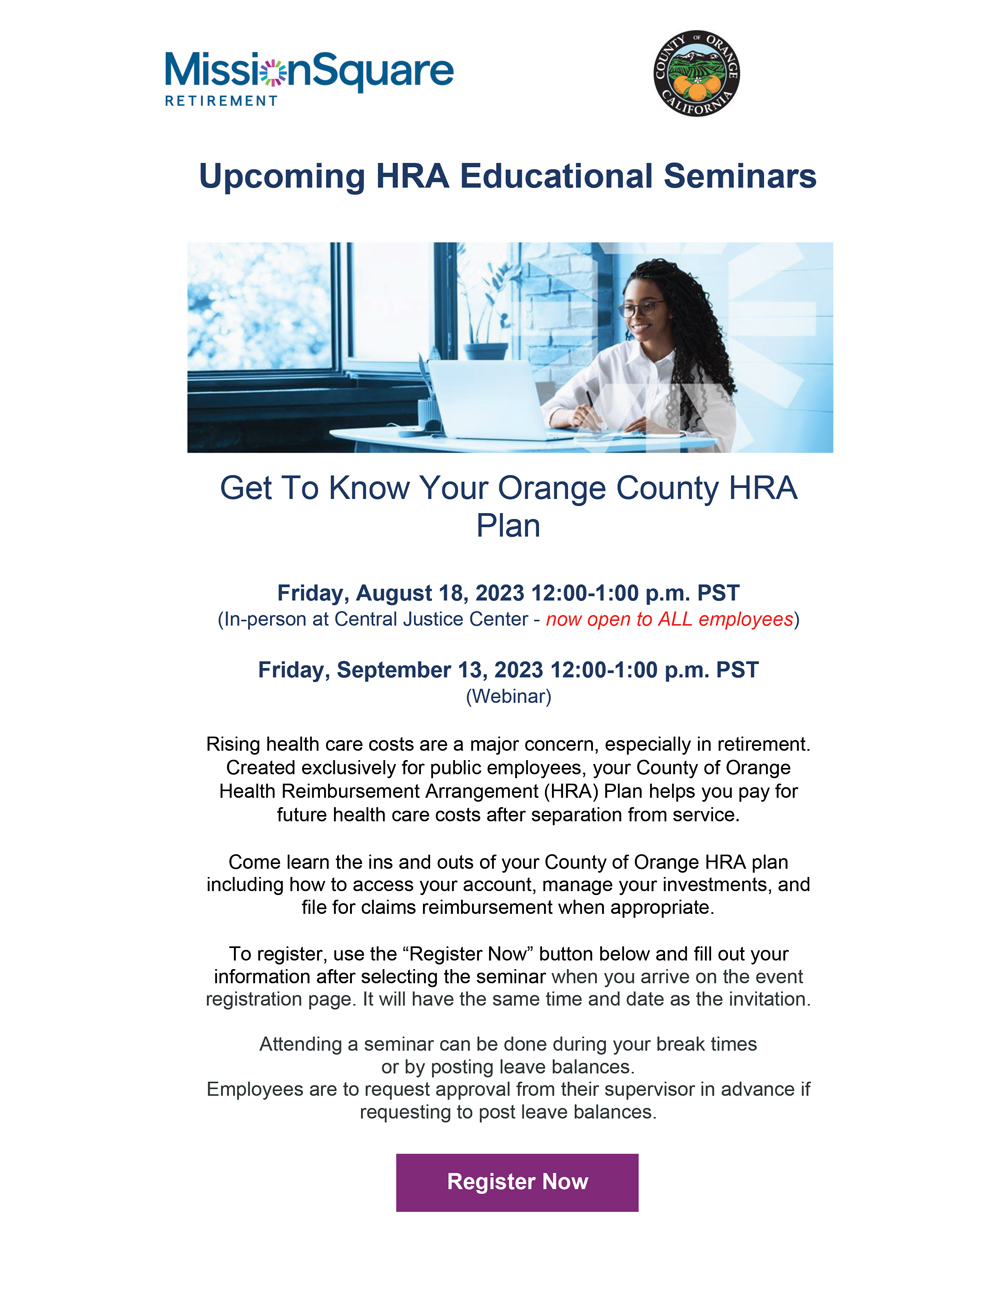 HRA-seminar-flyer-08-18-23-and-09-13-23-revised.jpg